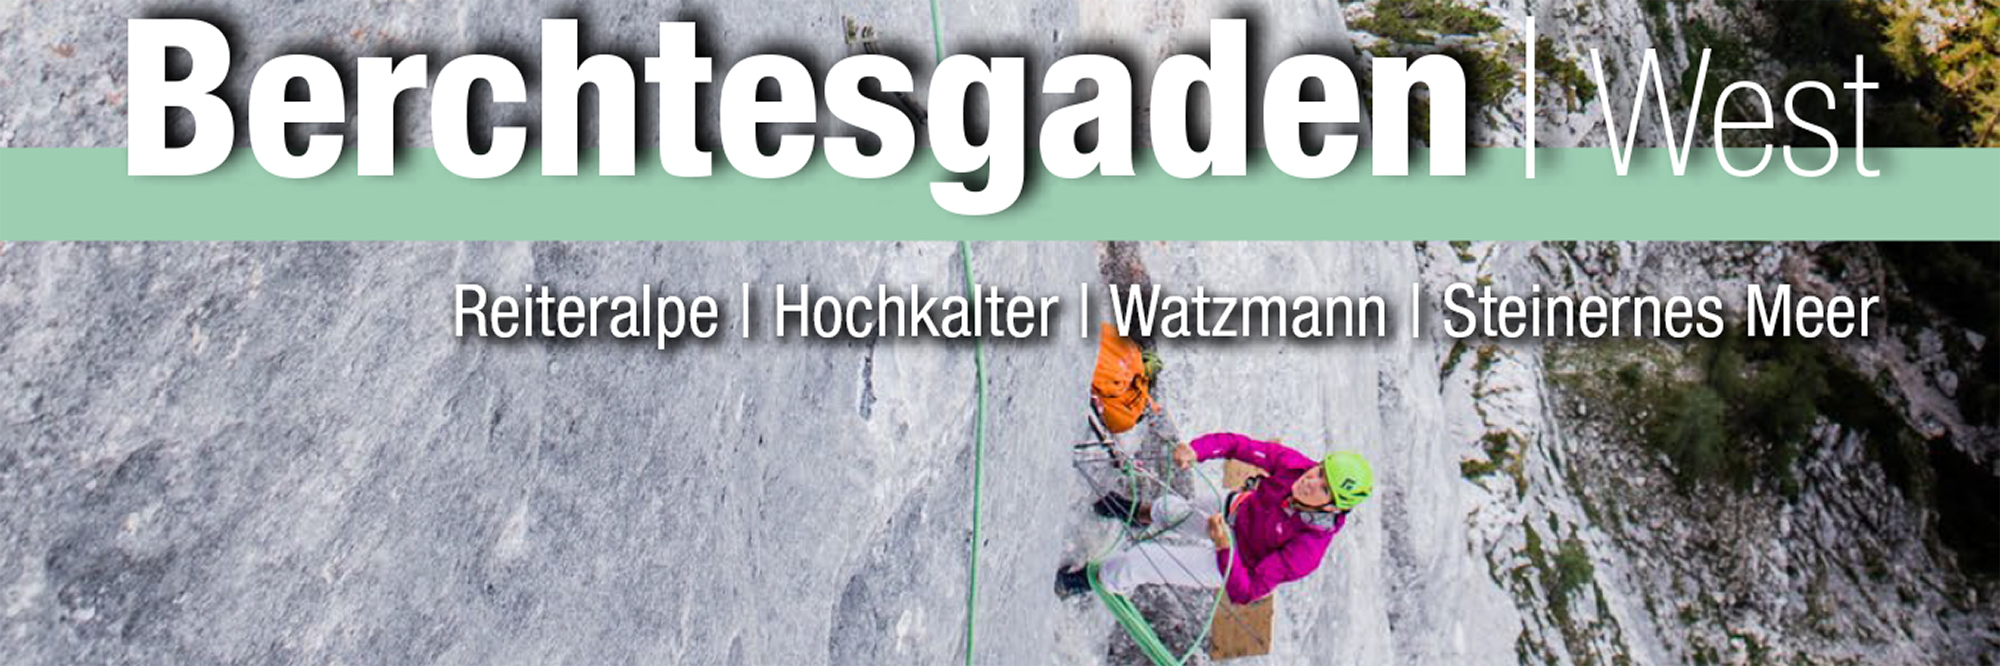 Kletterführer Berchtesgaden West